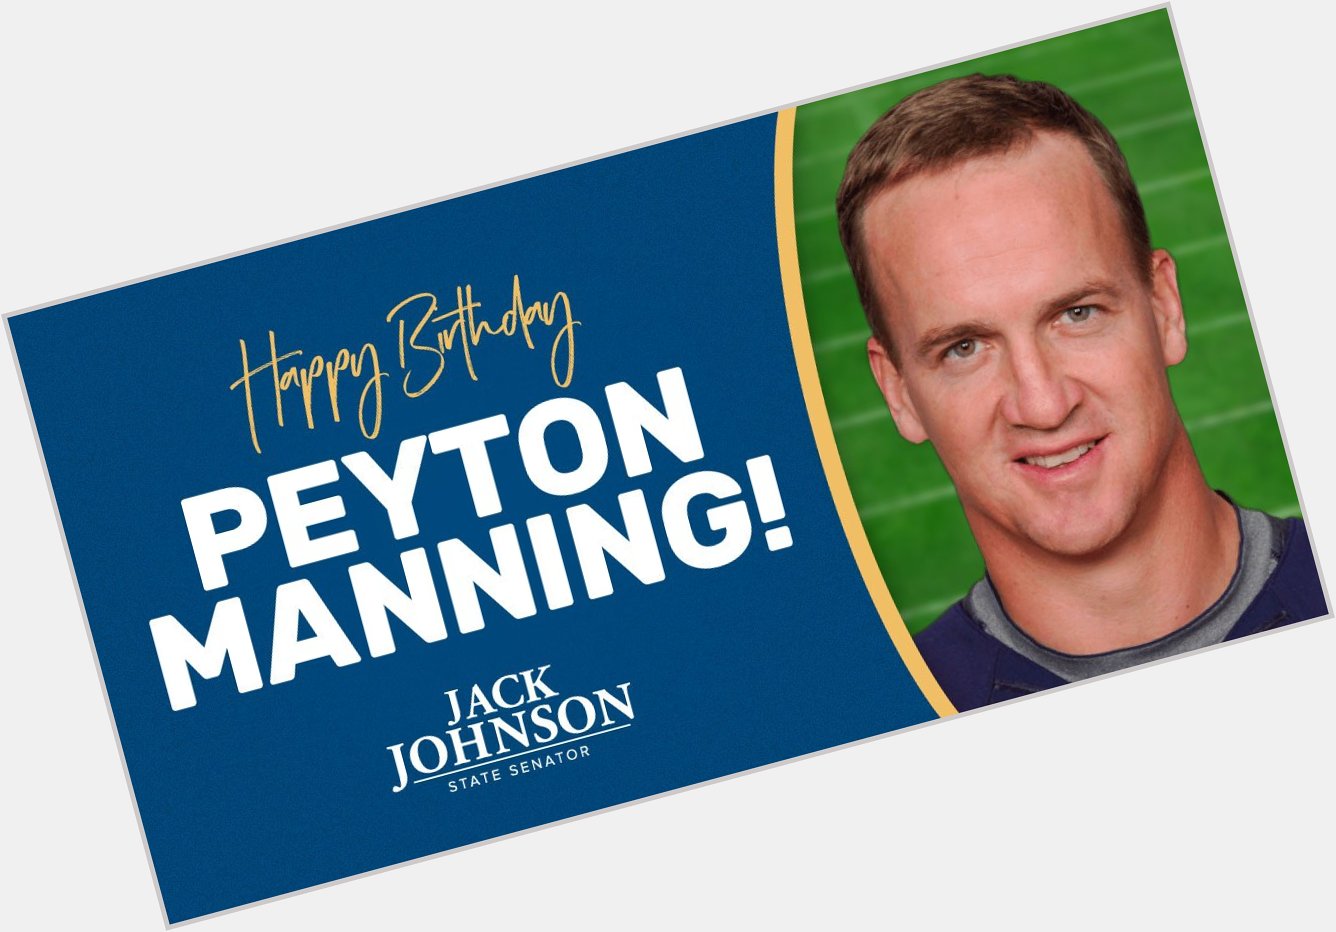 Happy birthday to the legendary Peyton Manning! 